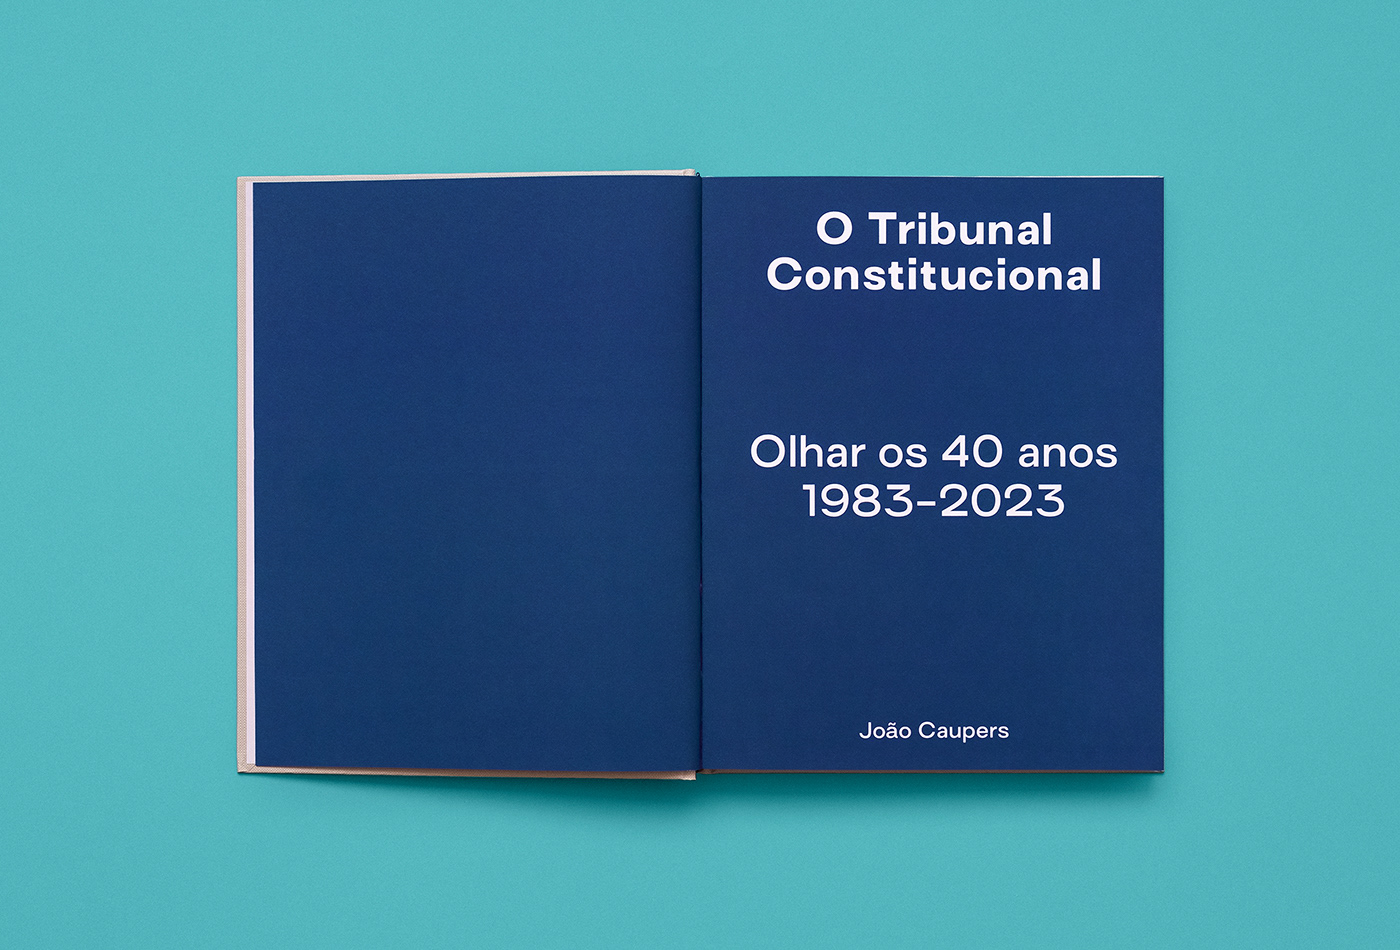 law court portuguese constitutional book design